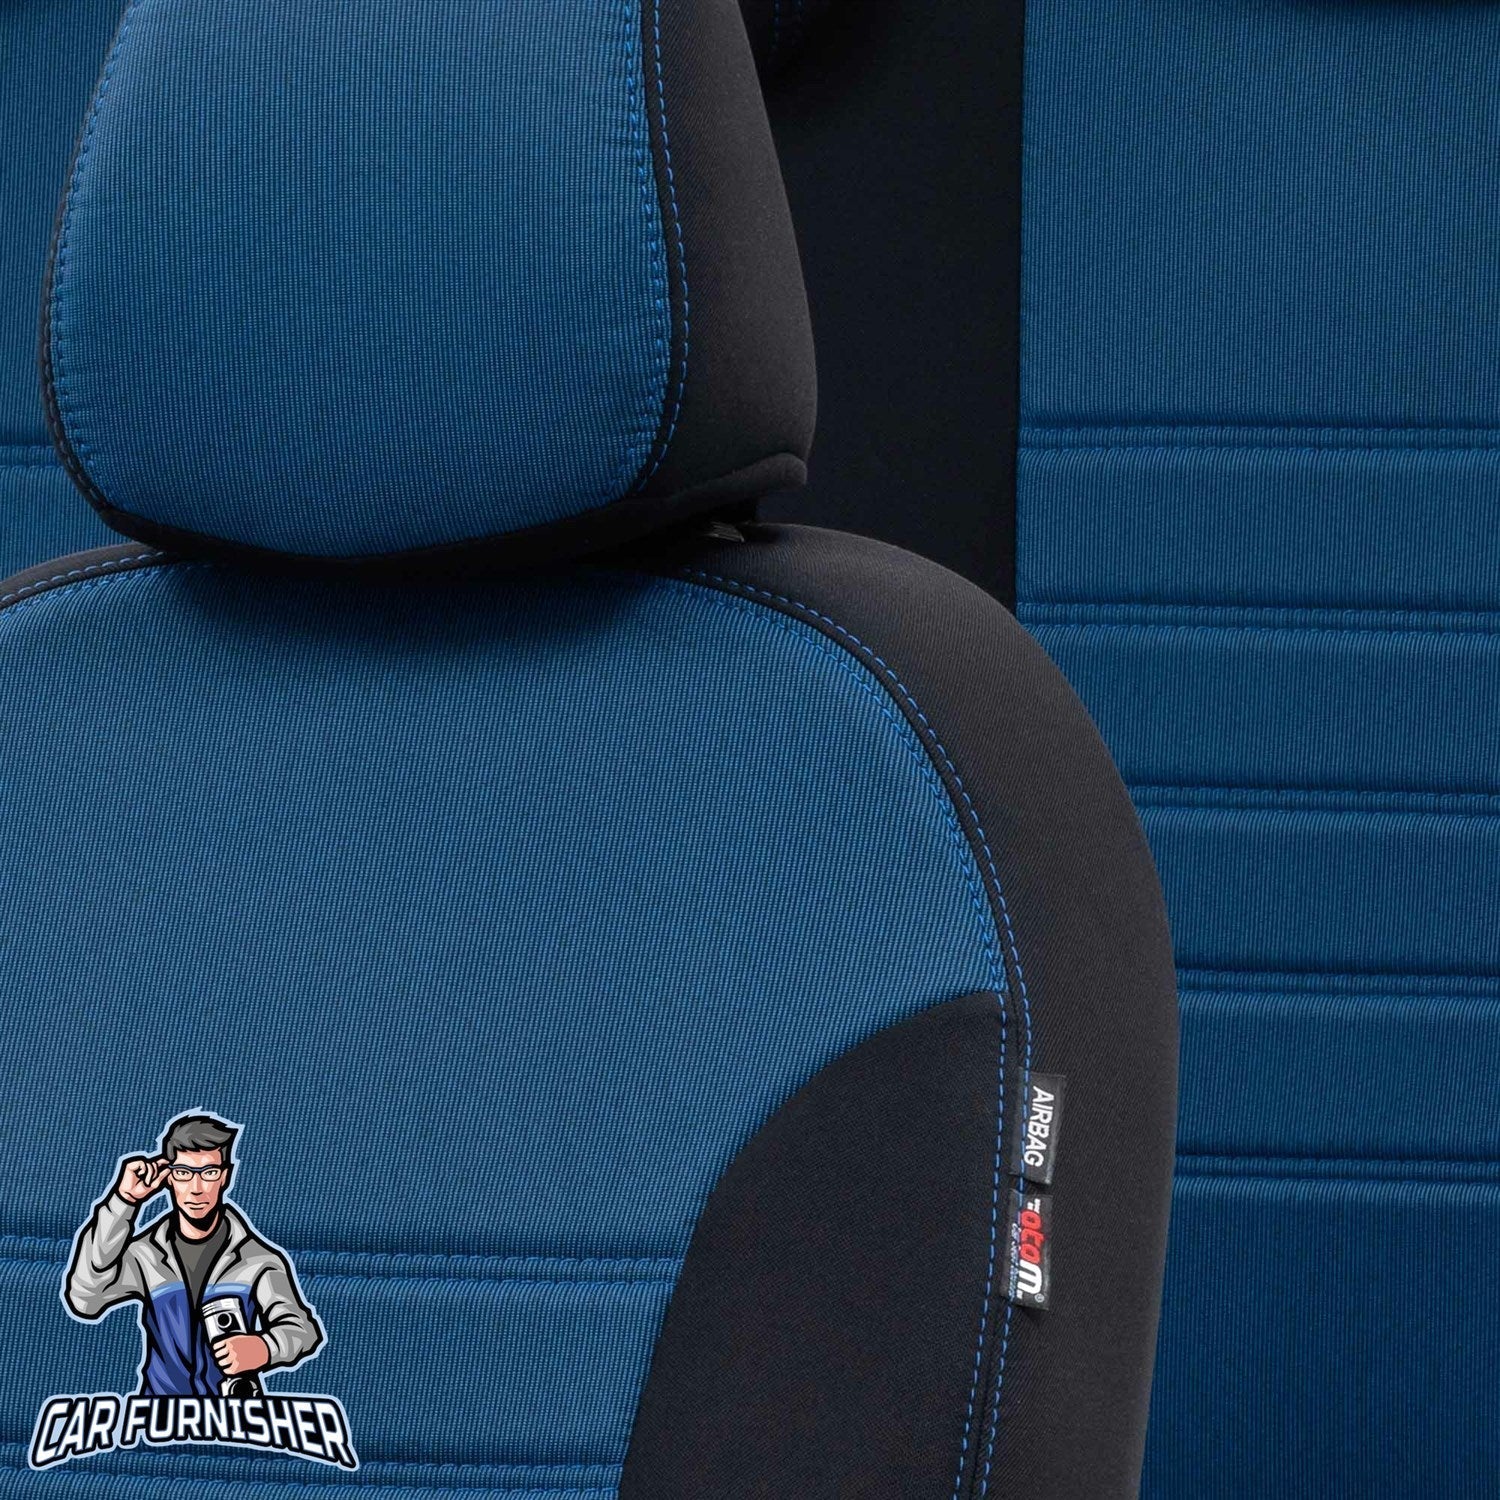 Daf 105 Seat Covers Original Jacquard Design Blue Jacquard Fabric